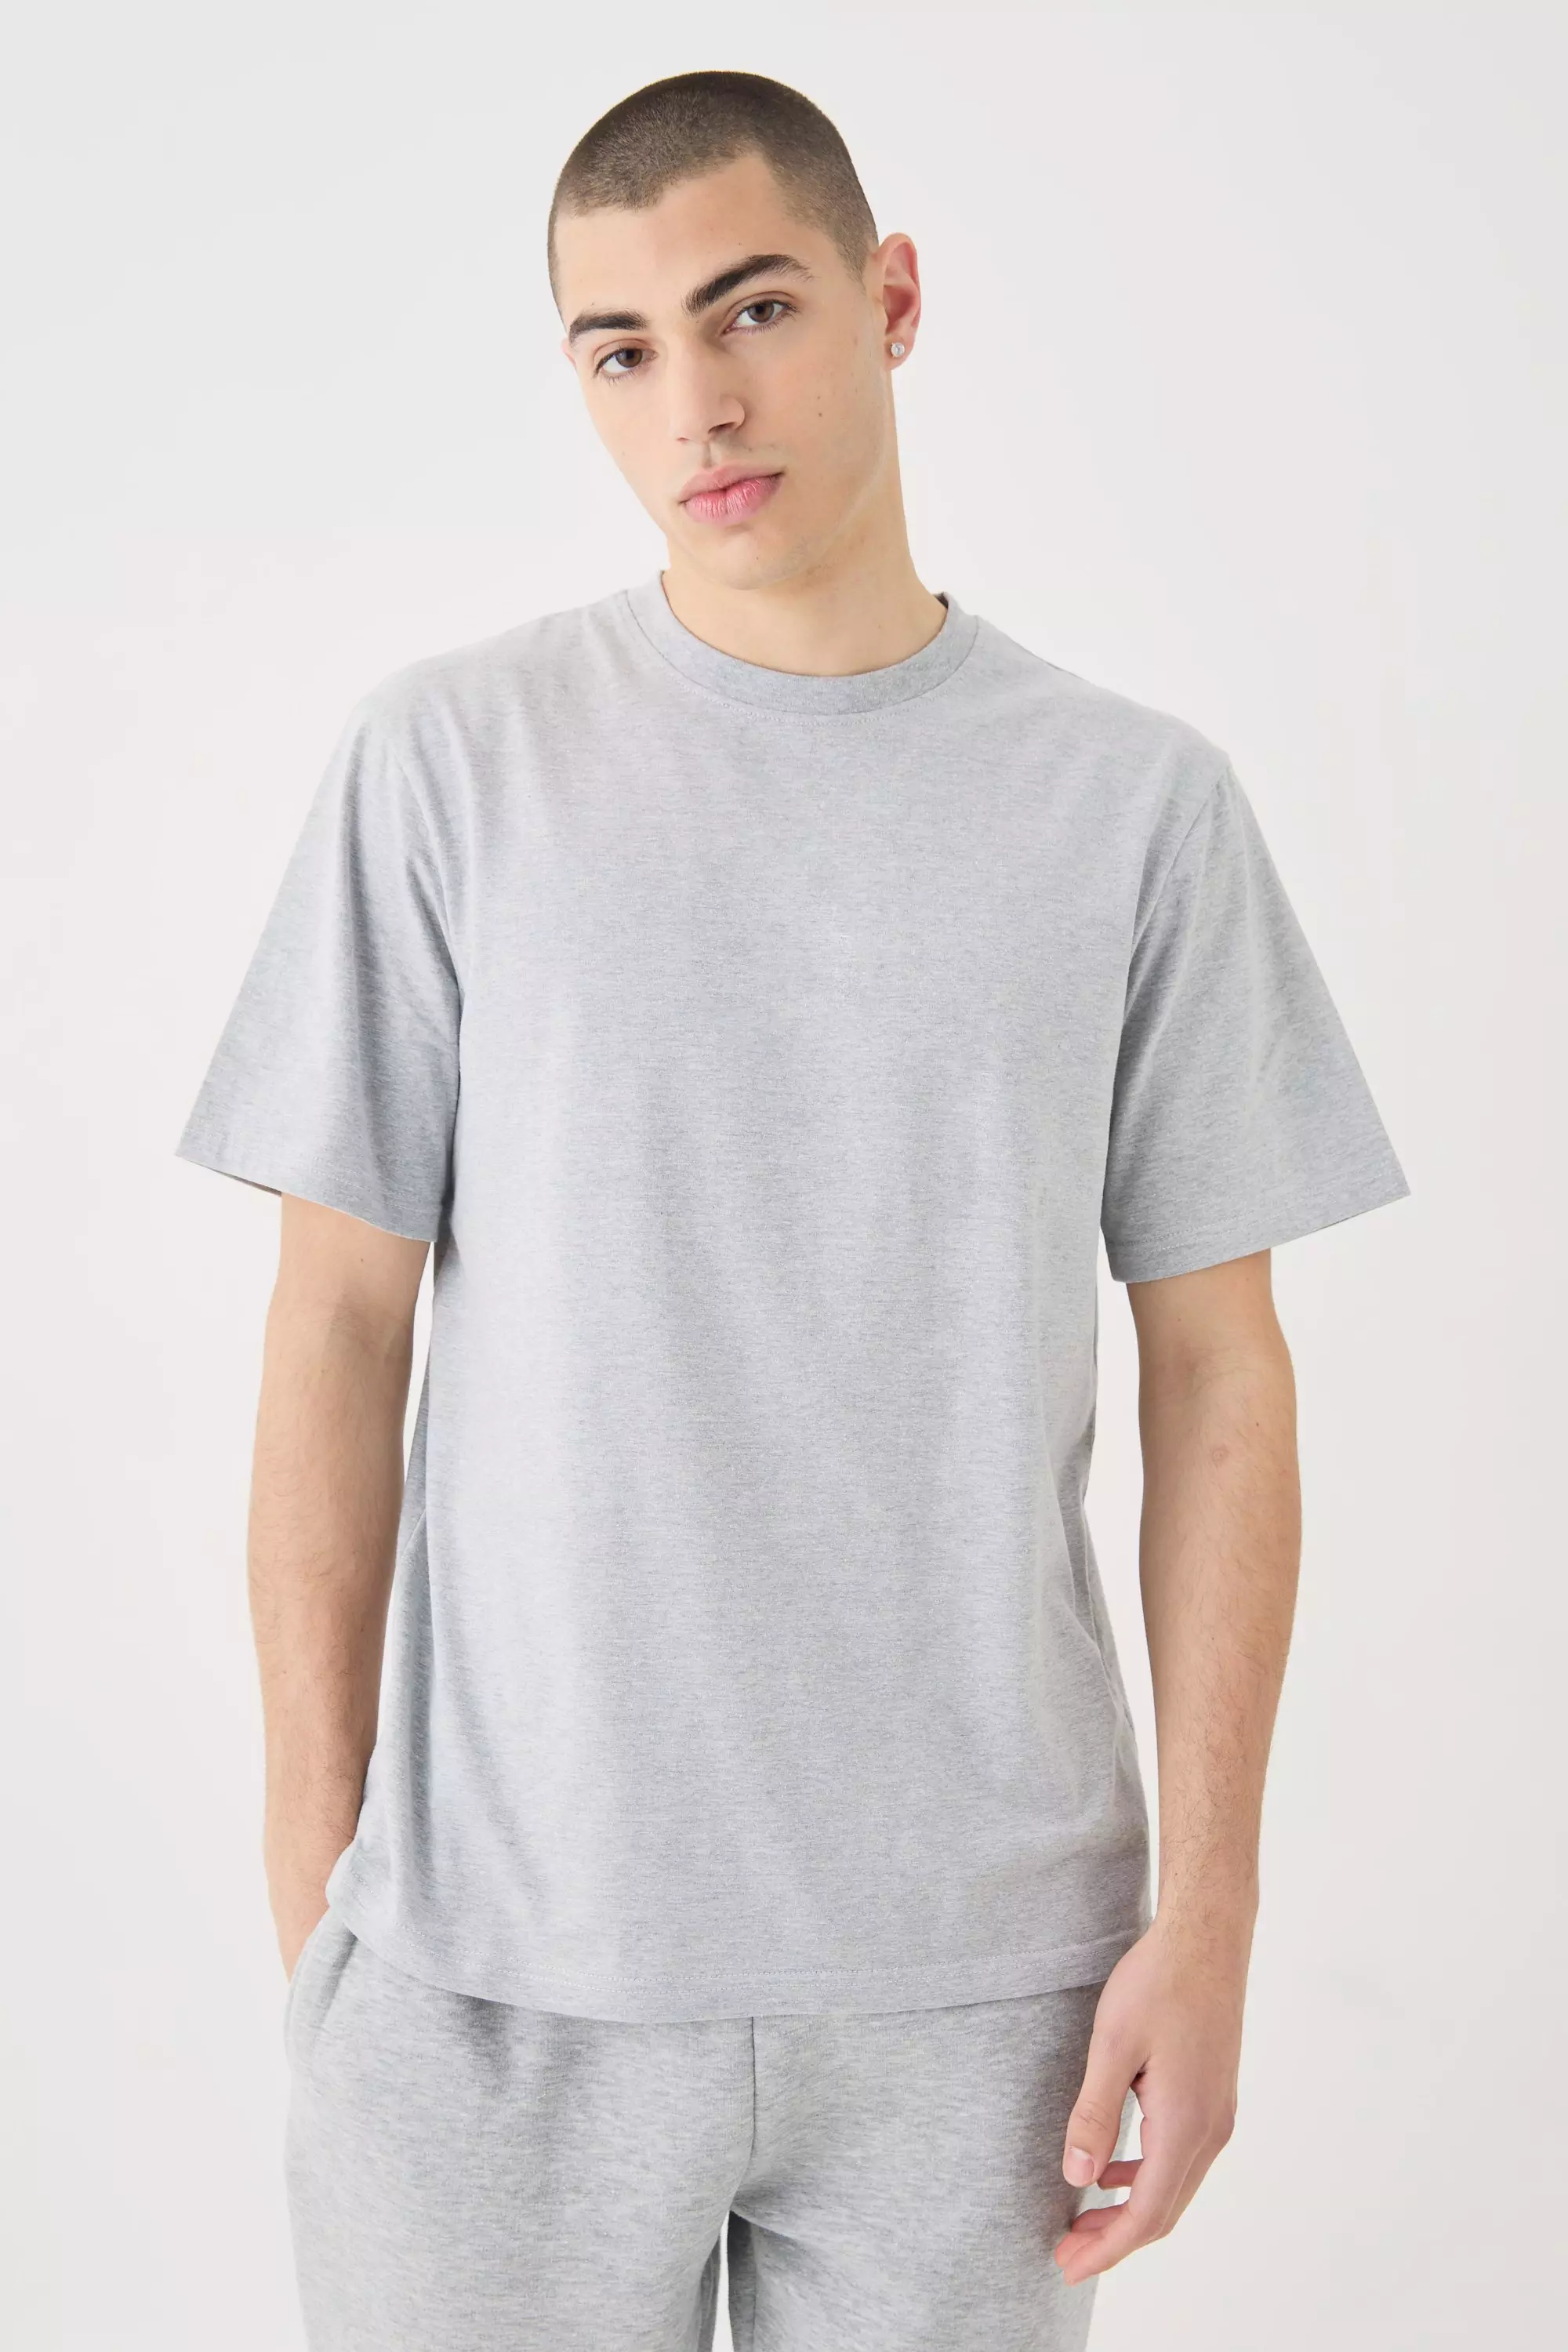 Grey Basic Crew Neck T-shirt